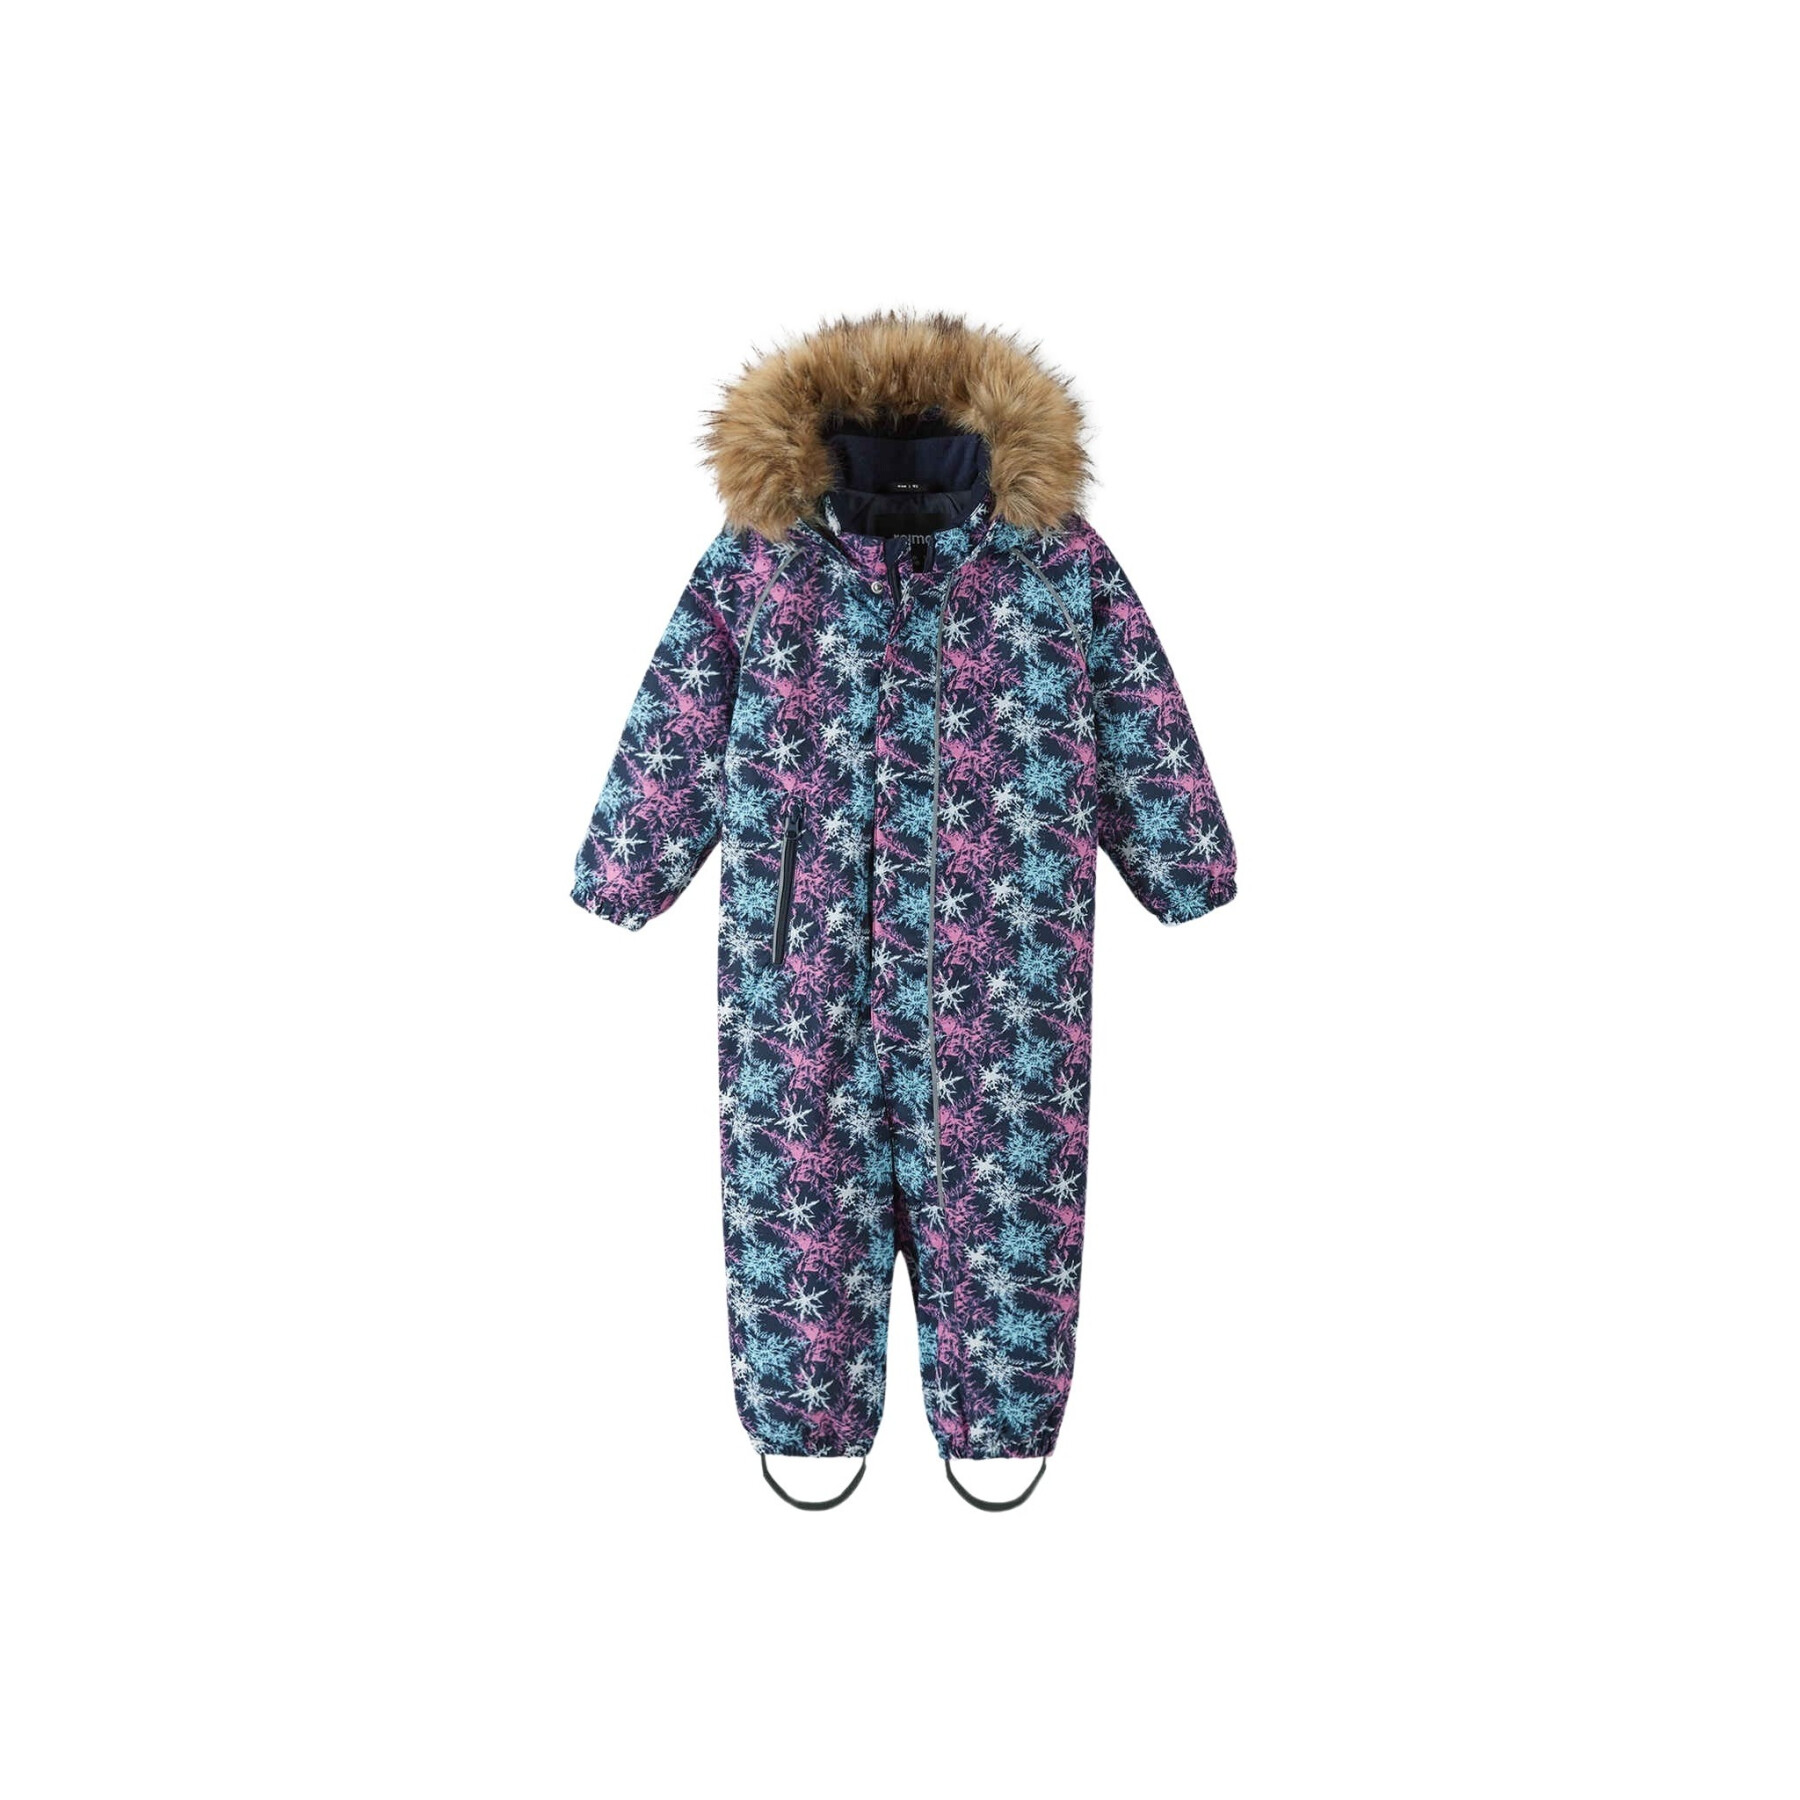 Baby winter suit Reima Hulaus